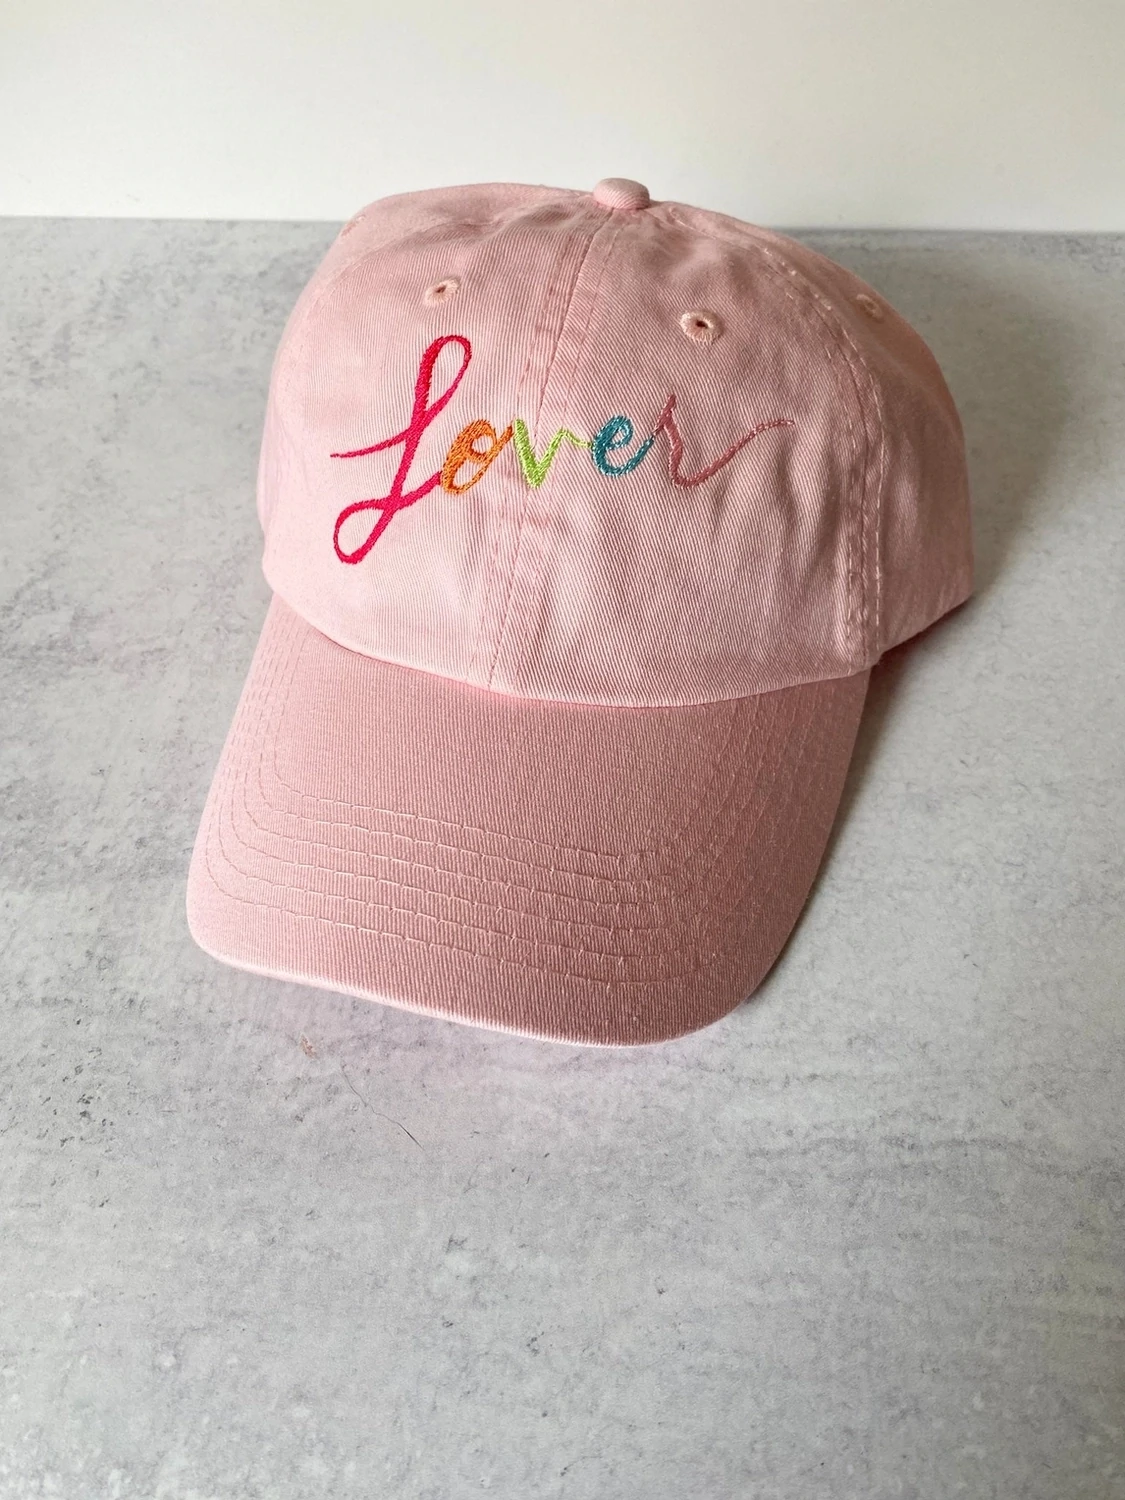 Lover Hat